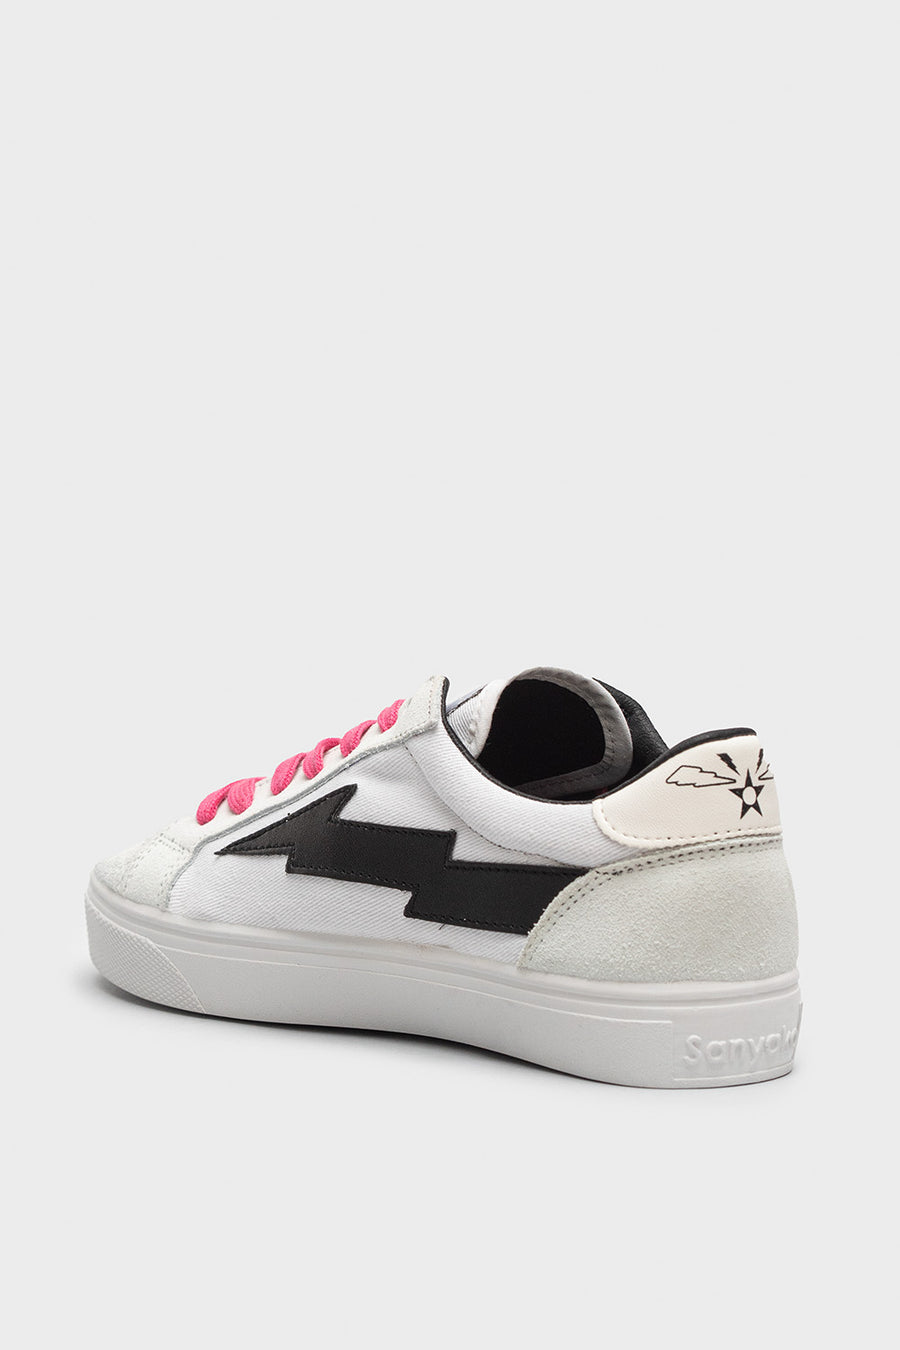 Sneakers Sanyako in tessuto bianco e rosa thul002